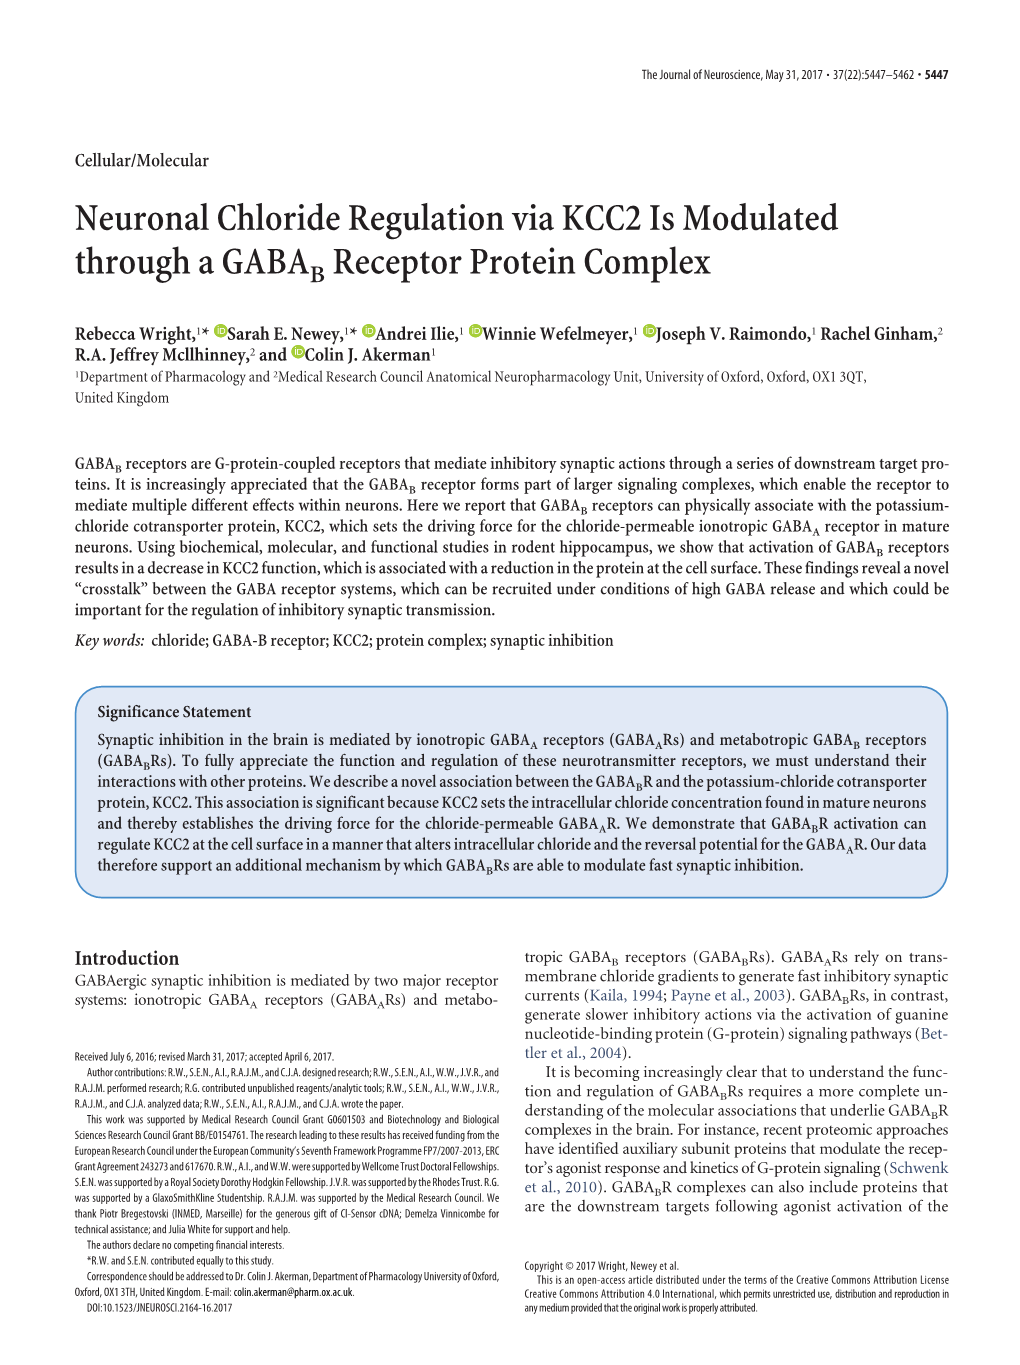 Neuronal Chloride Regulation Via KCC2 Is Modulated Through a GABAB Receptor Protein Complex